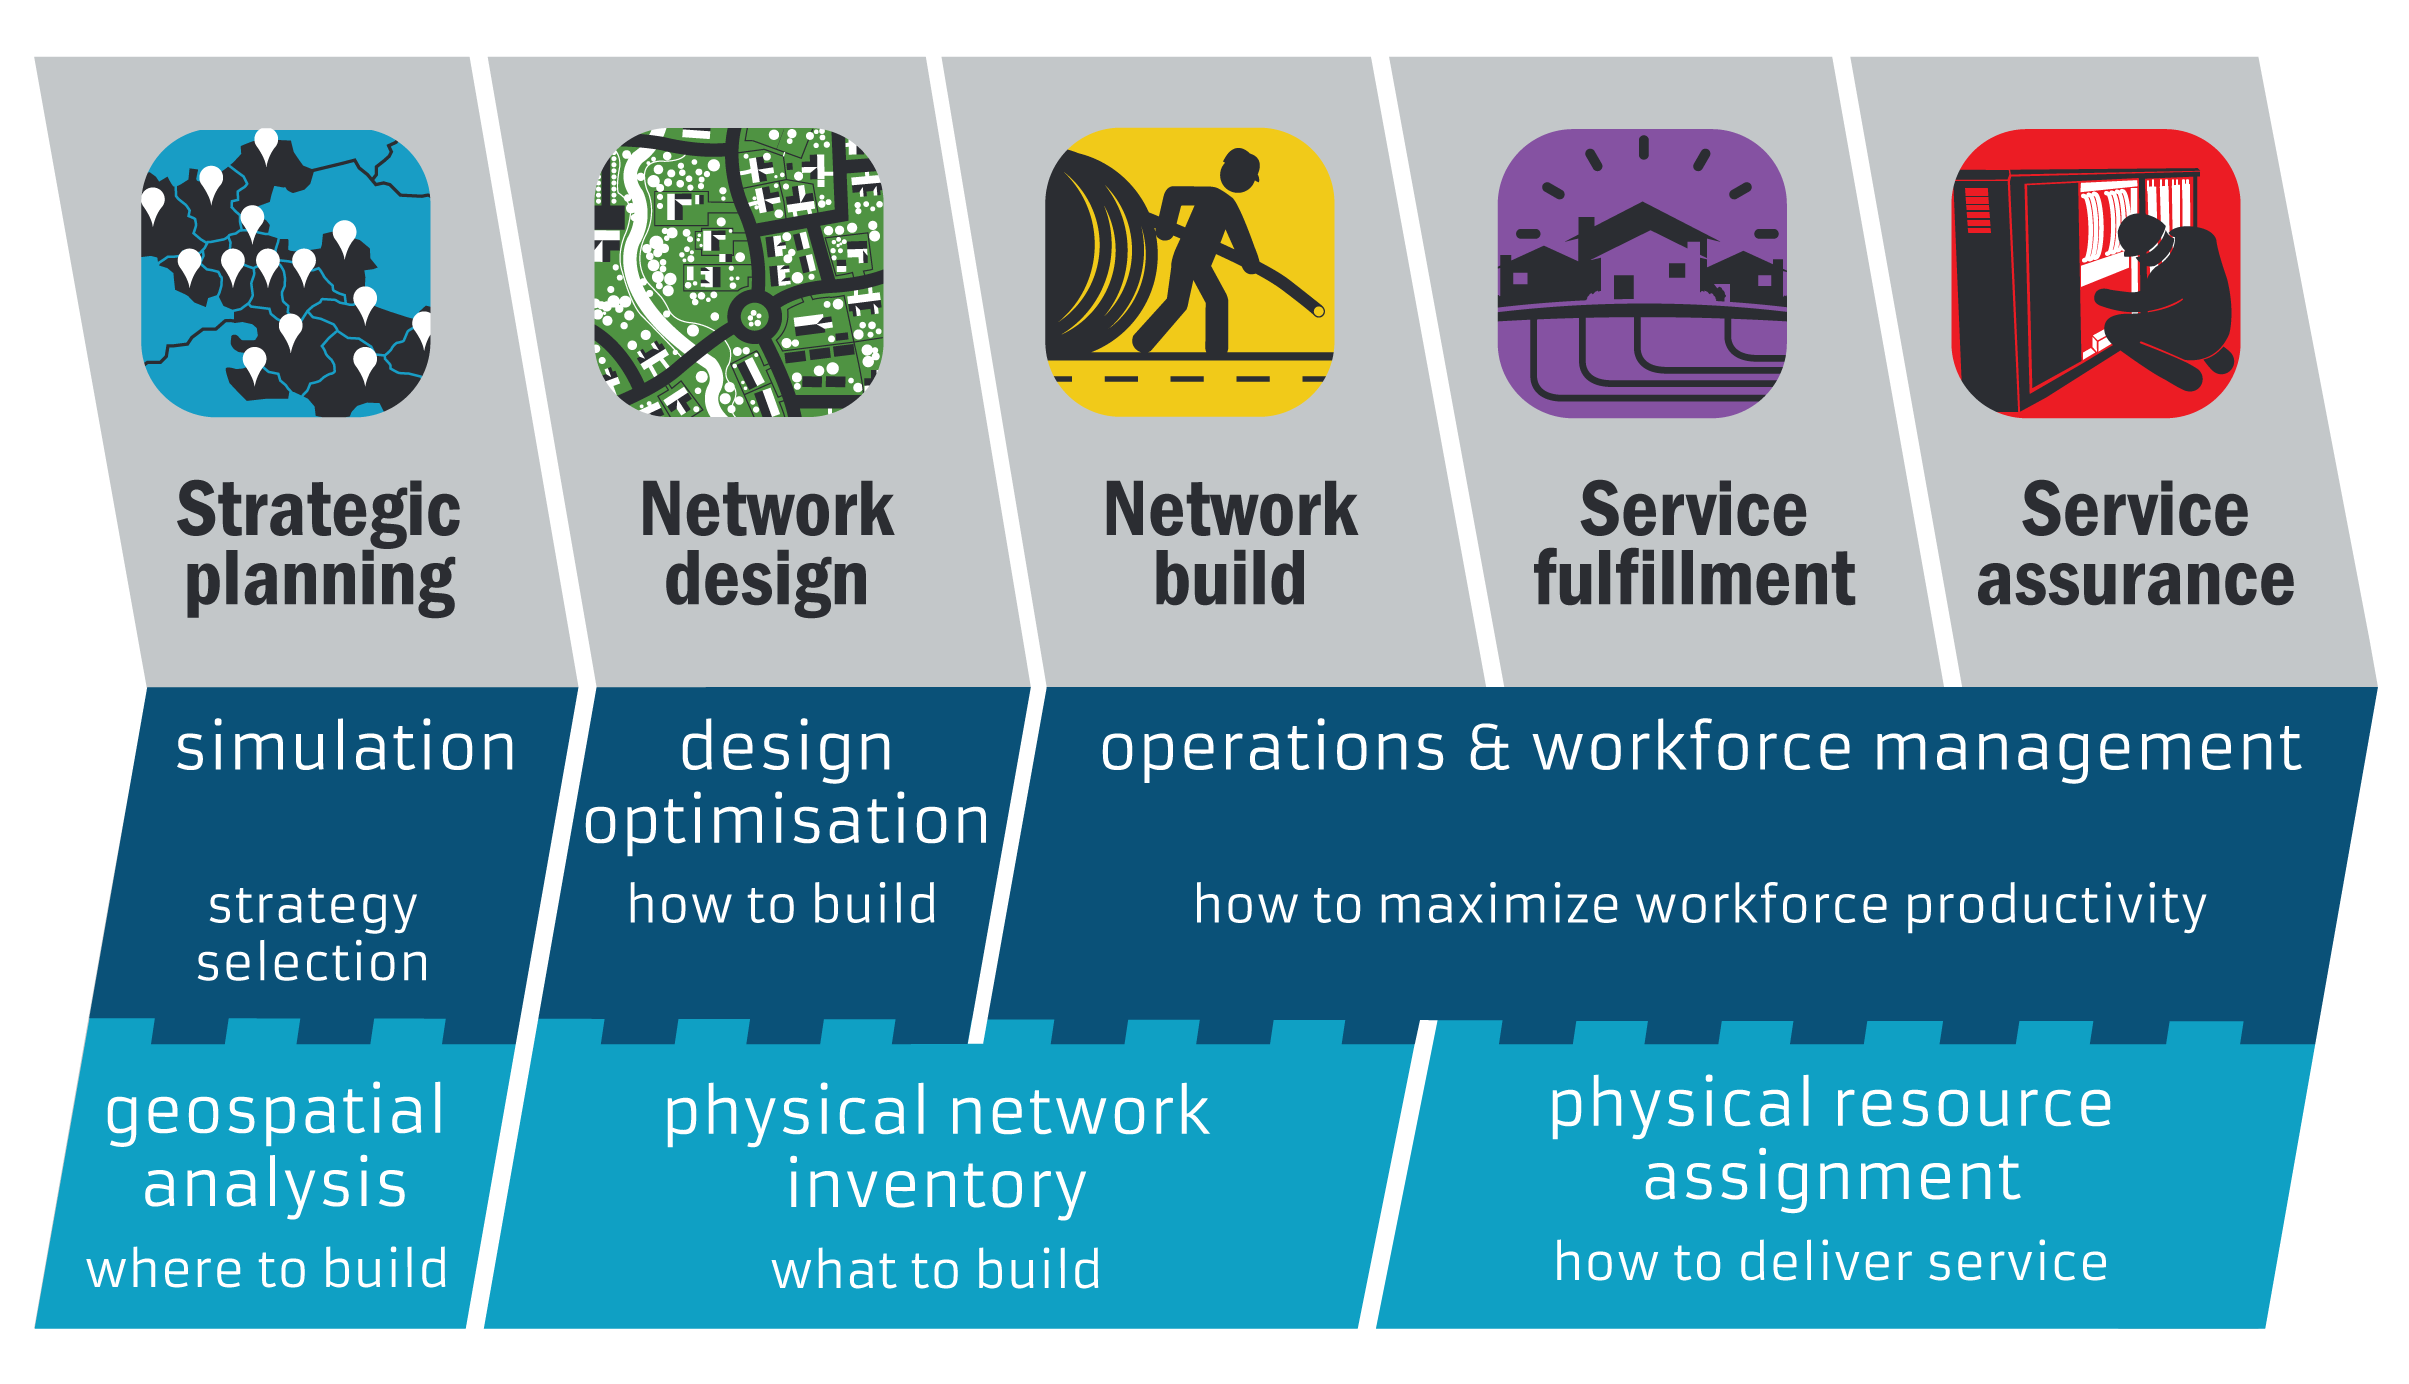 Net plan. Network Design. Strategic workforce planning стратегическое планирование. Strategic Network Design. Network Planner.